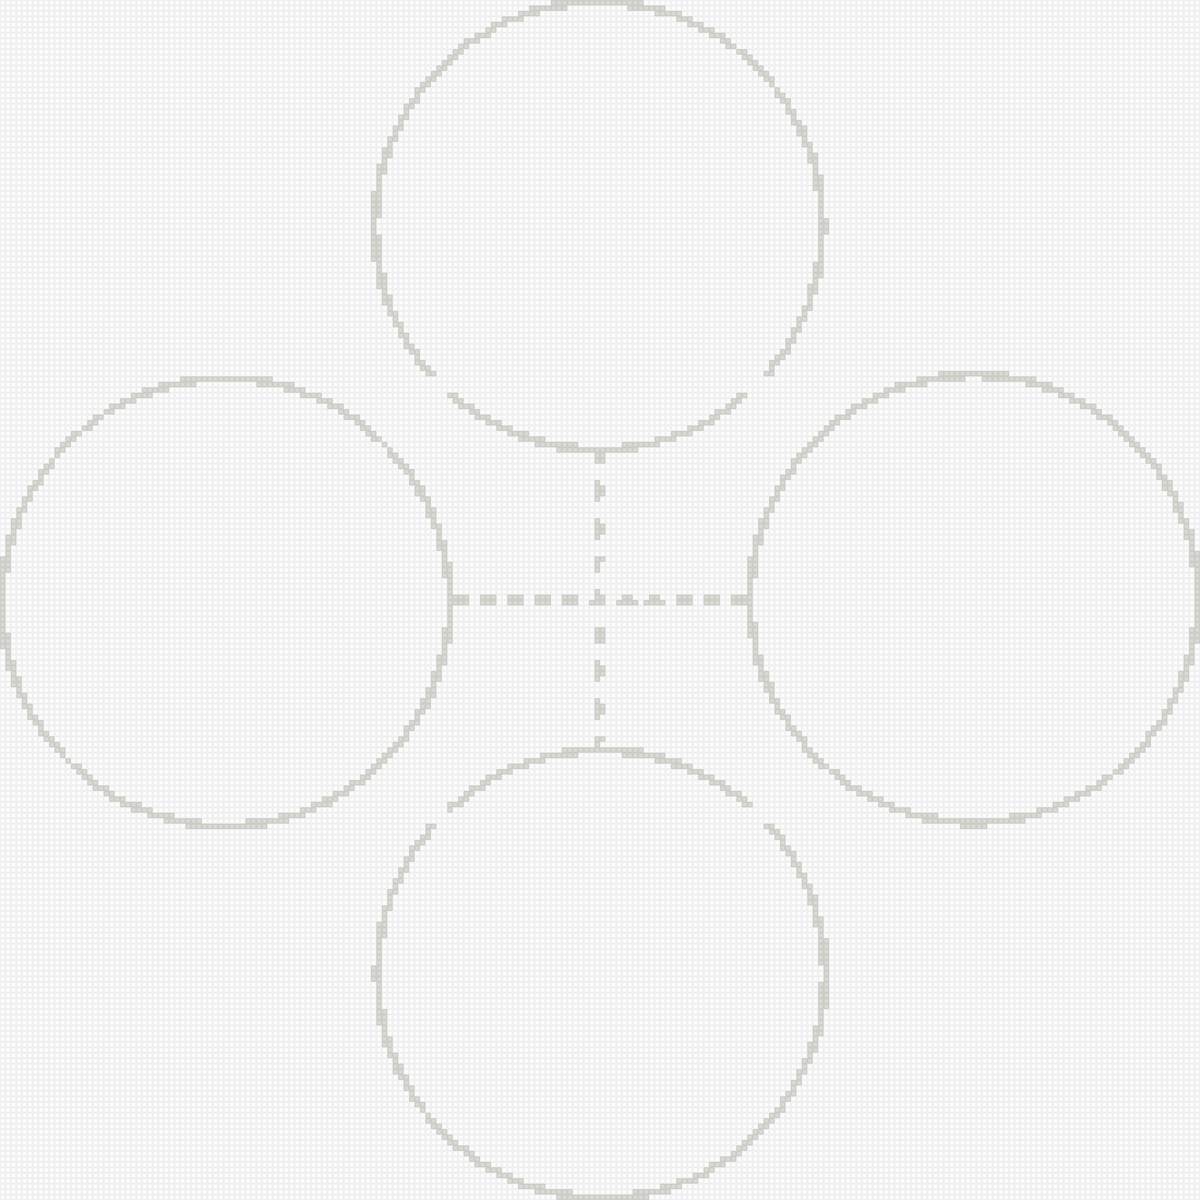 4 круга центр 220x220 крестов, Гамма 2 цв., Перемешивание 0% - гамма 2 цв., перемешивание 0%, 220x220 крестов, 4 круга центр - предпросмотр